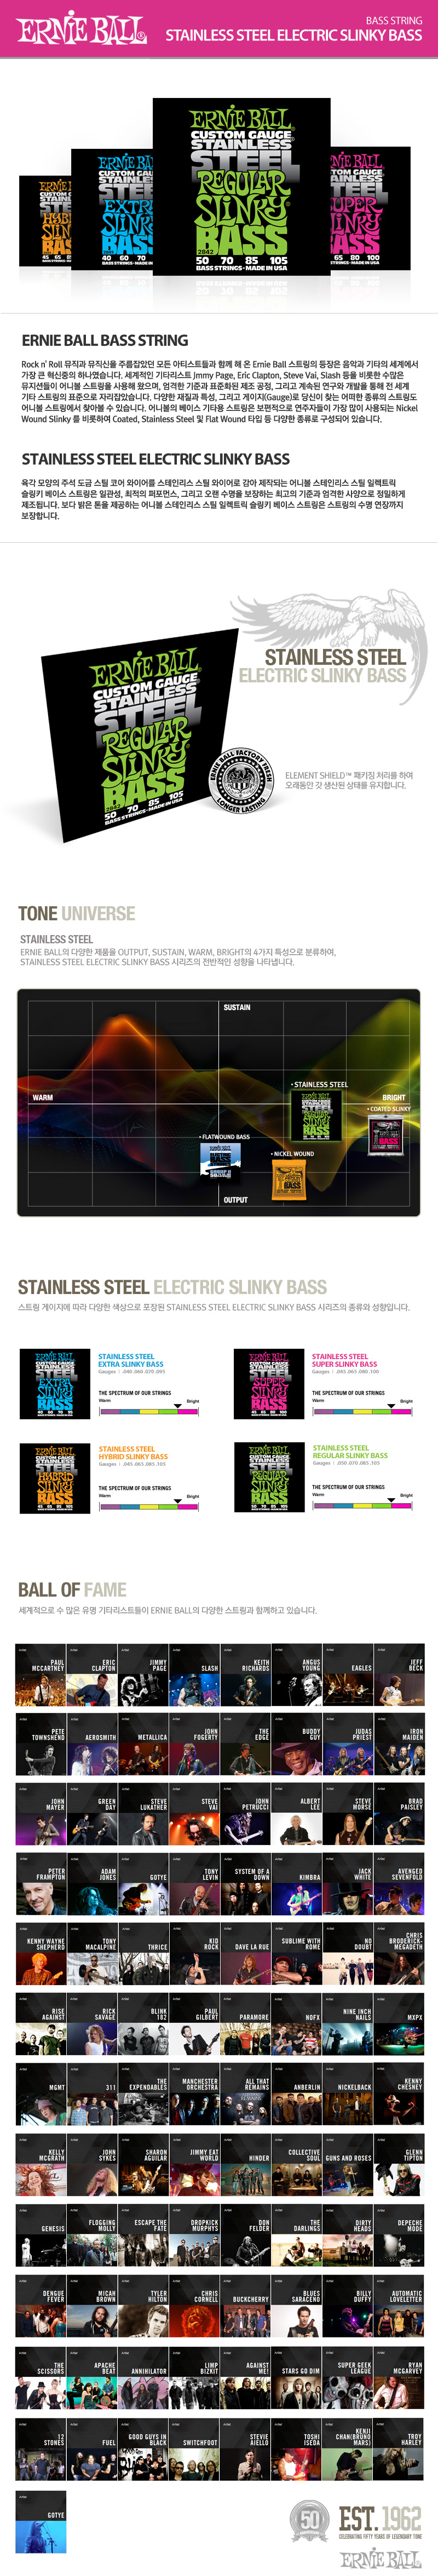 Stainless_Steel_Slinky_Bass_detail_160815.jpg